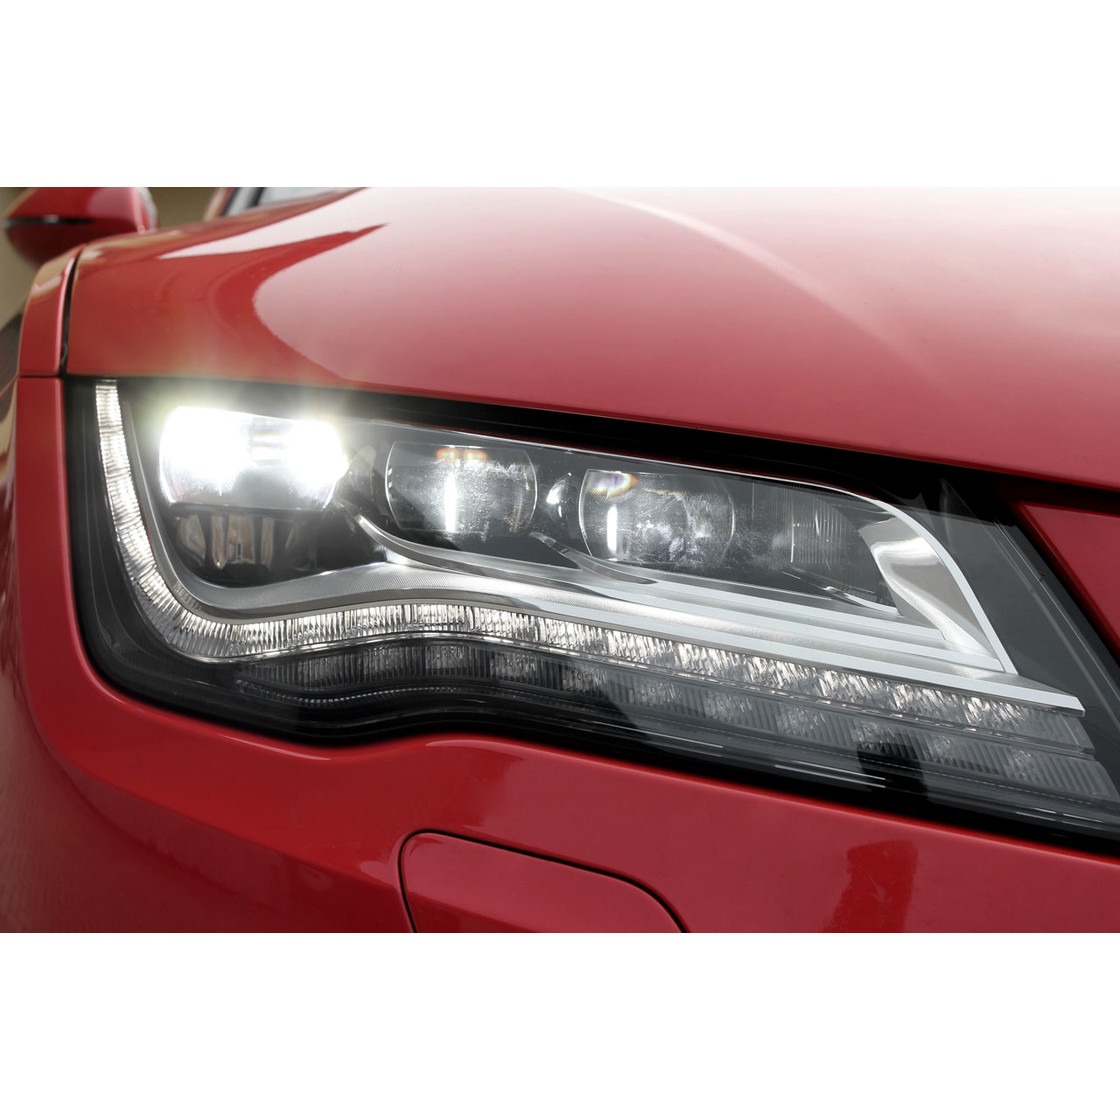 Adapter LED headlights for Audi A7 4G - Bi-Xenon, 61,99 €